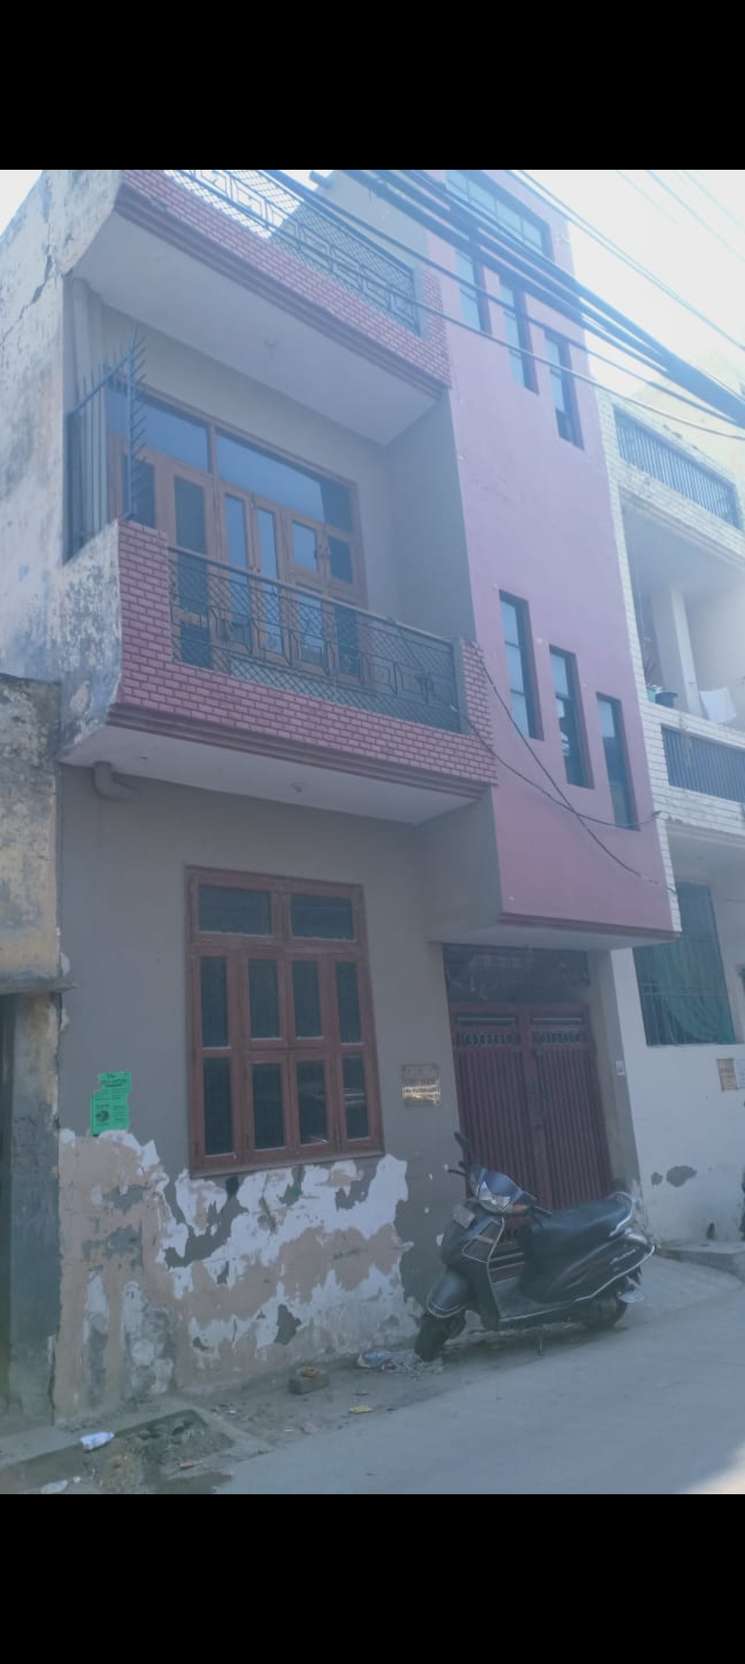 4 Bedroom 75 Sq.Yd. Independent House in Ashok Vihar Phase 1 Gurgaon